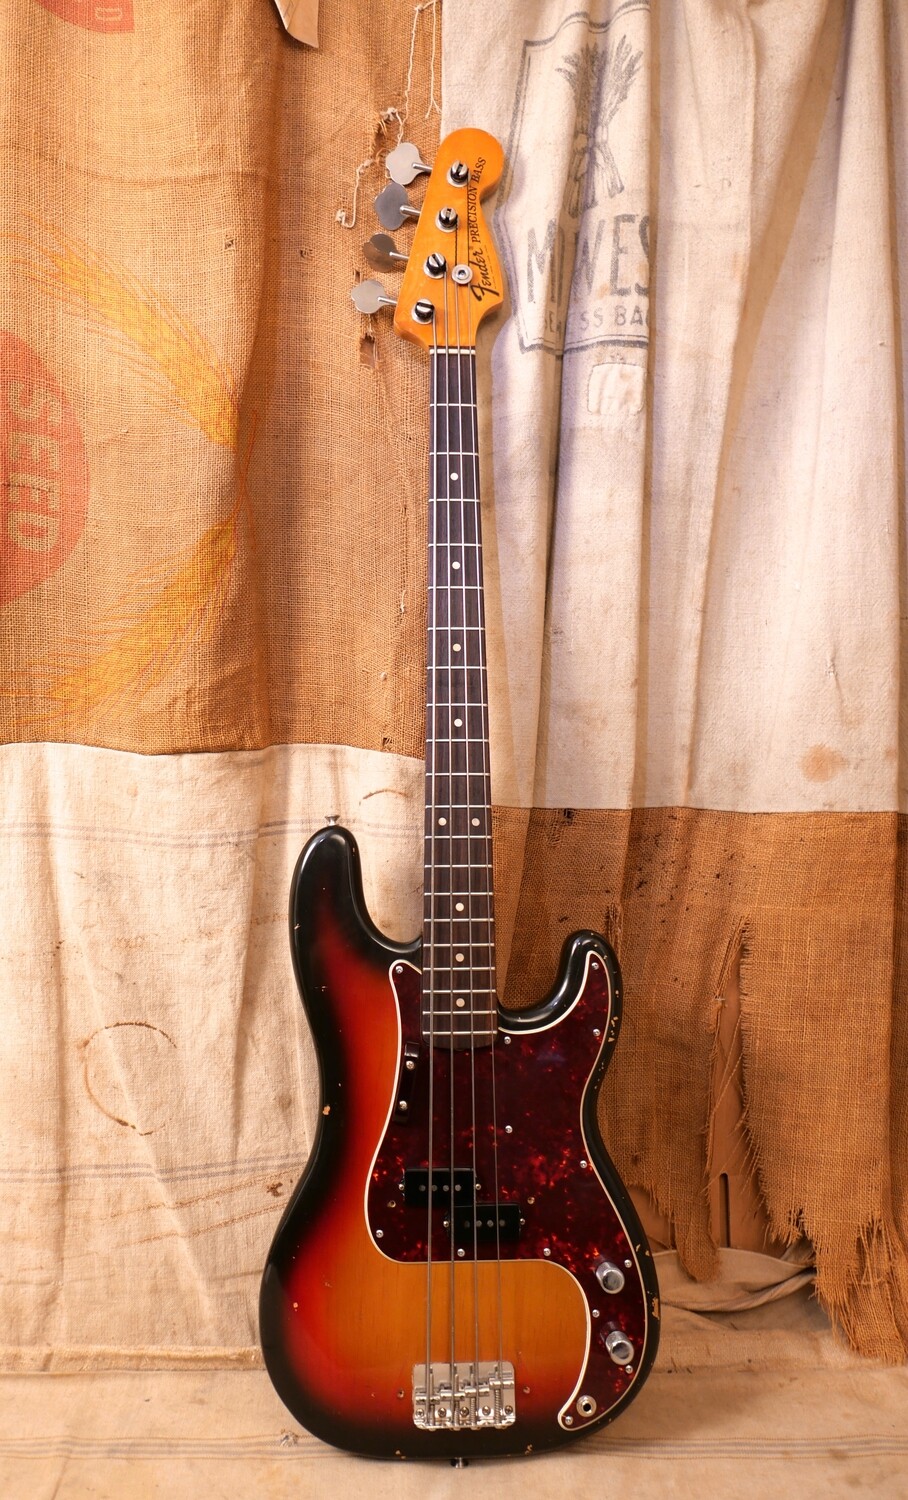 1974 Fender Precision Bass Sunburst